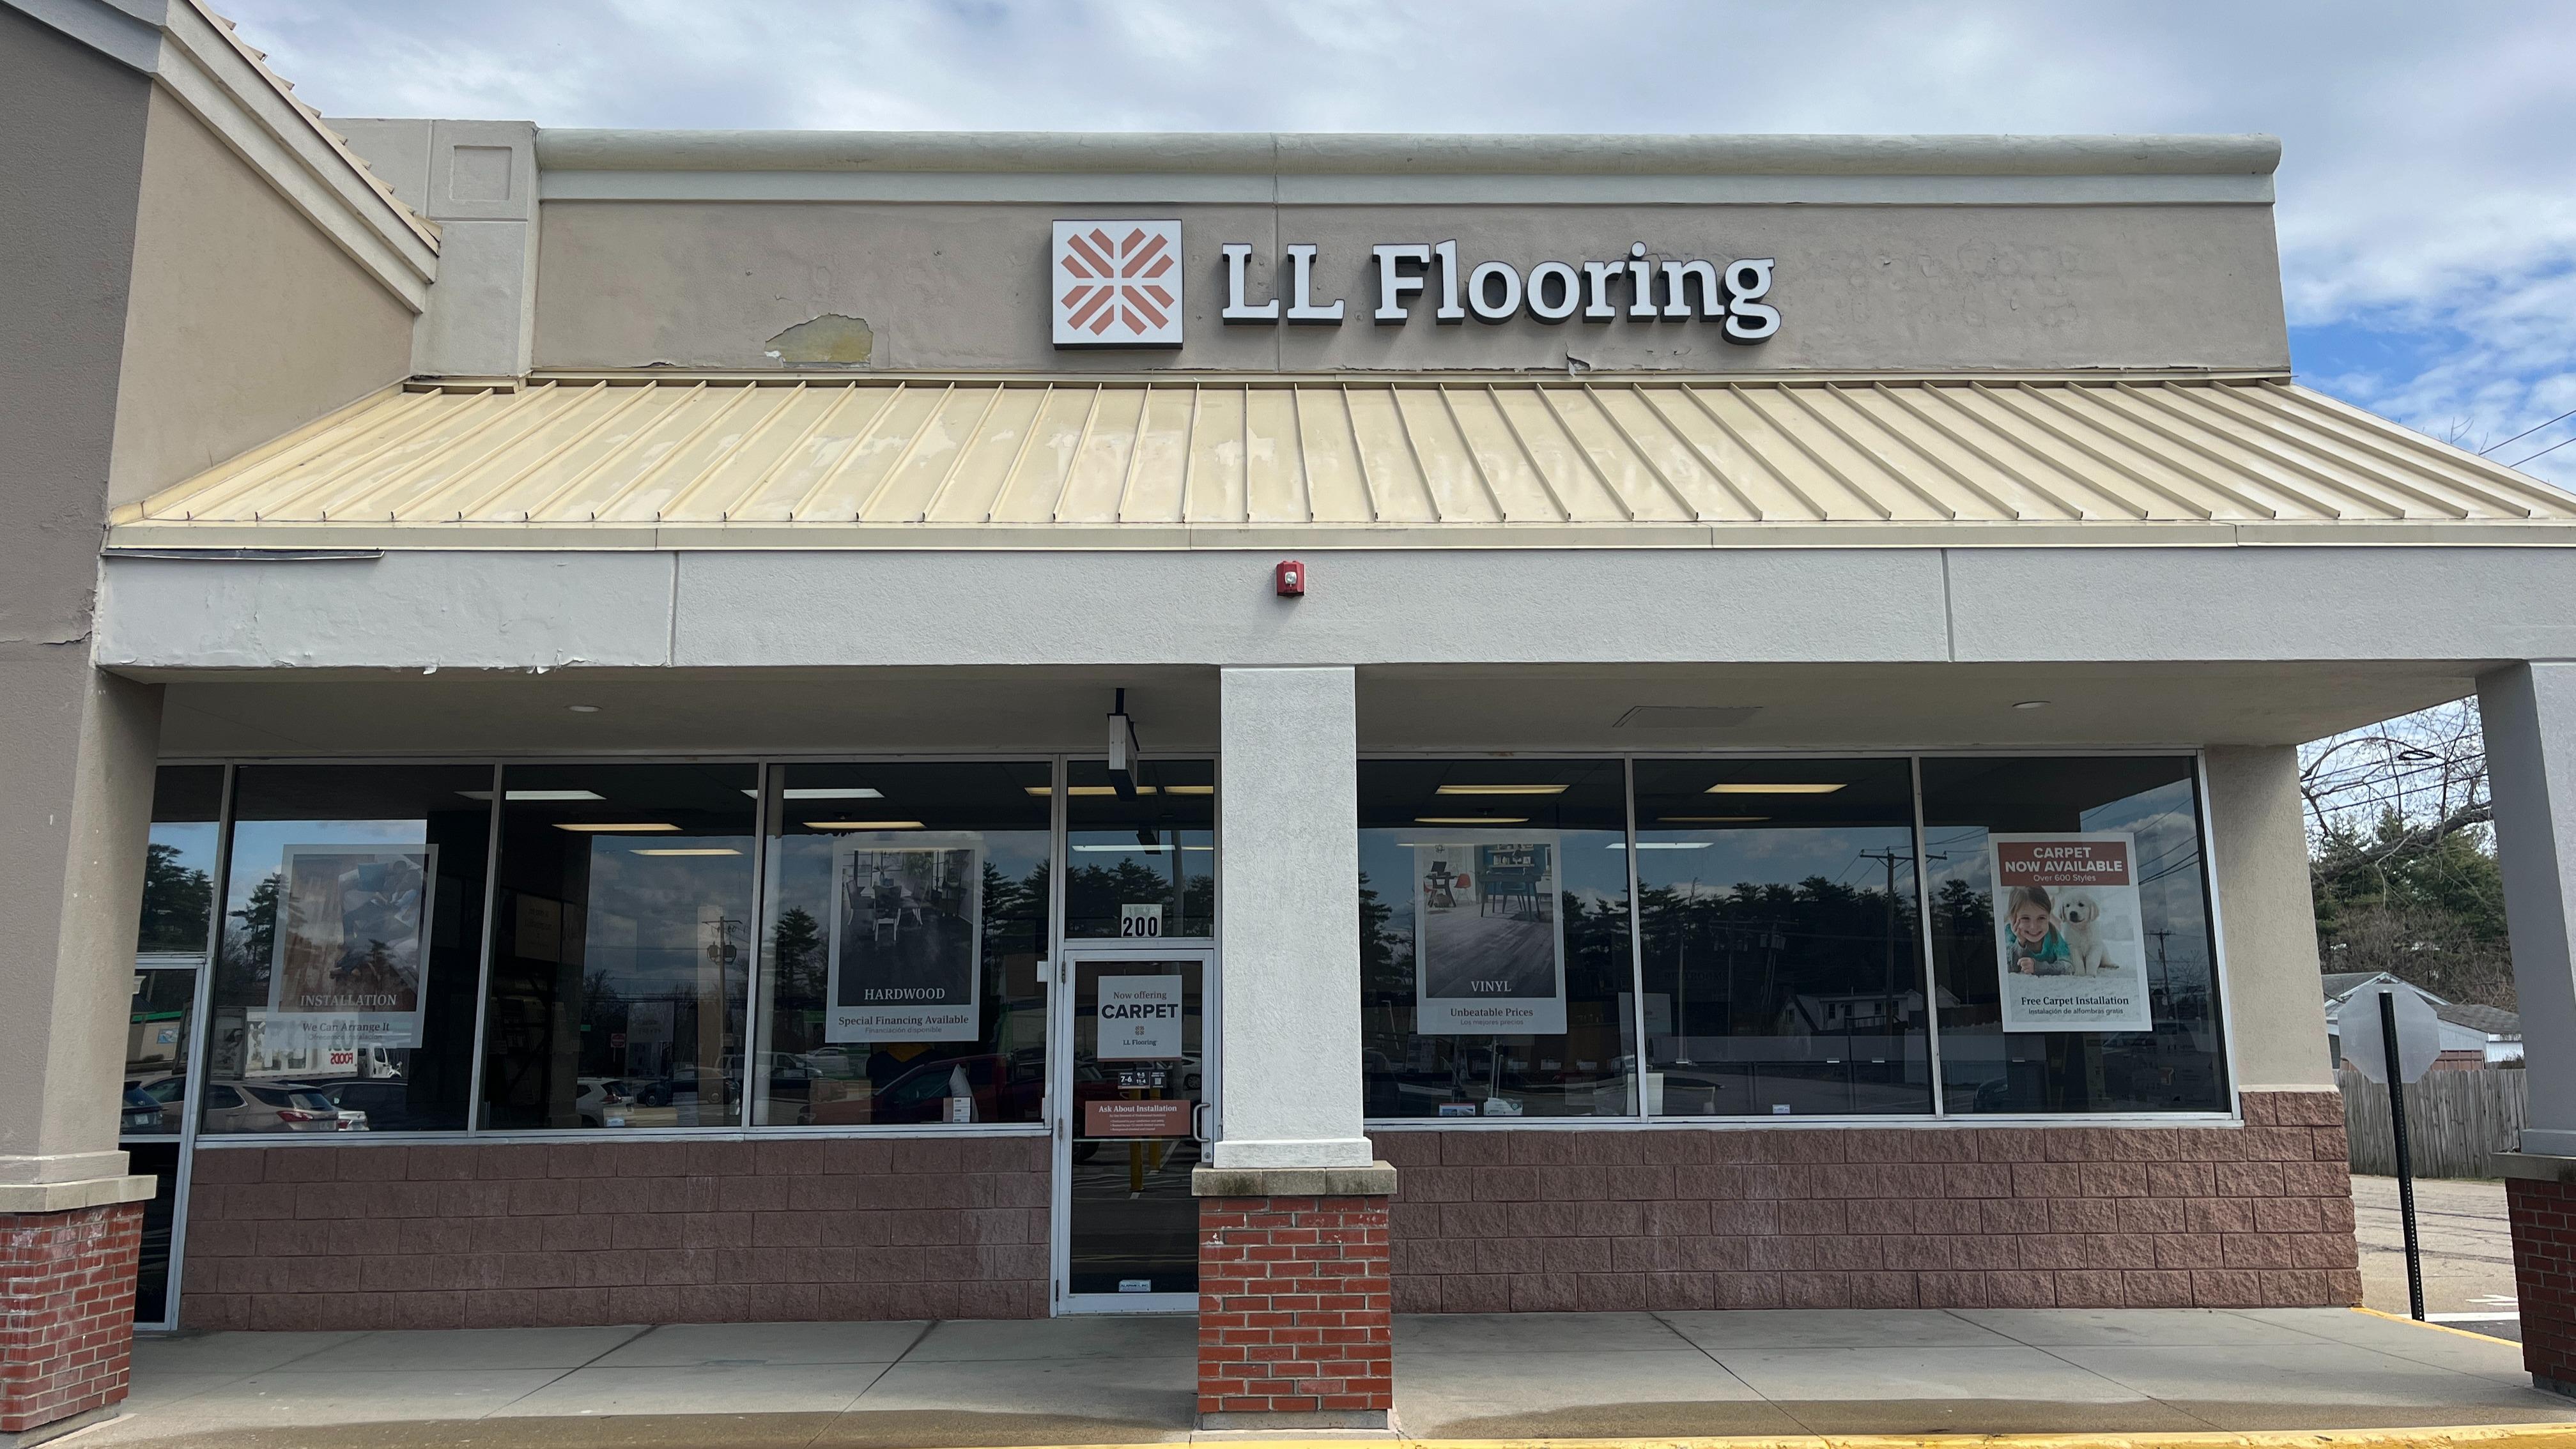 LL Flooring #1288 Somersworth | 200 Tri City Plaza | Storefront